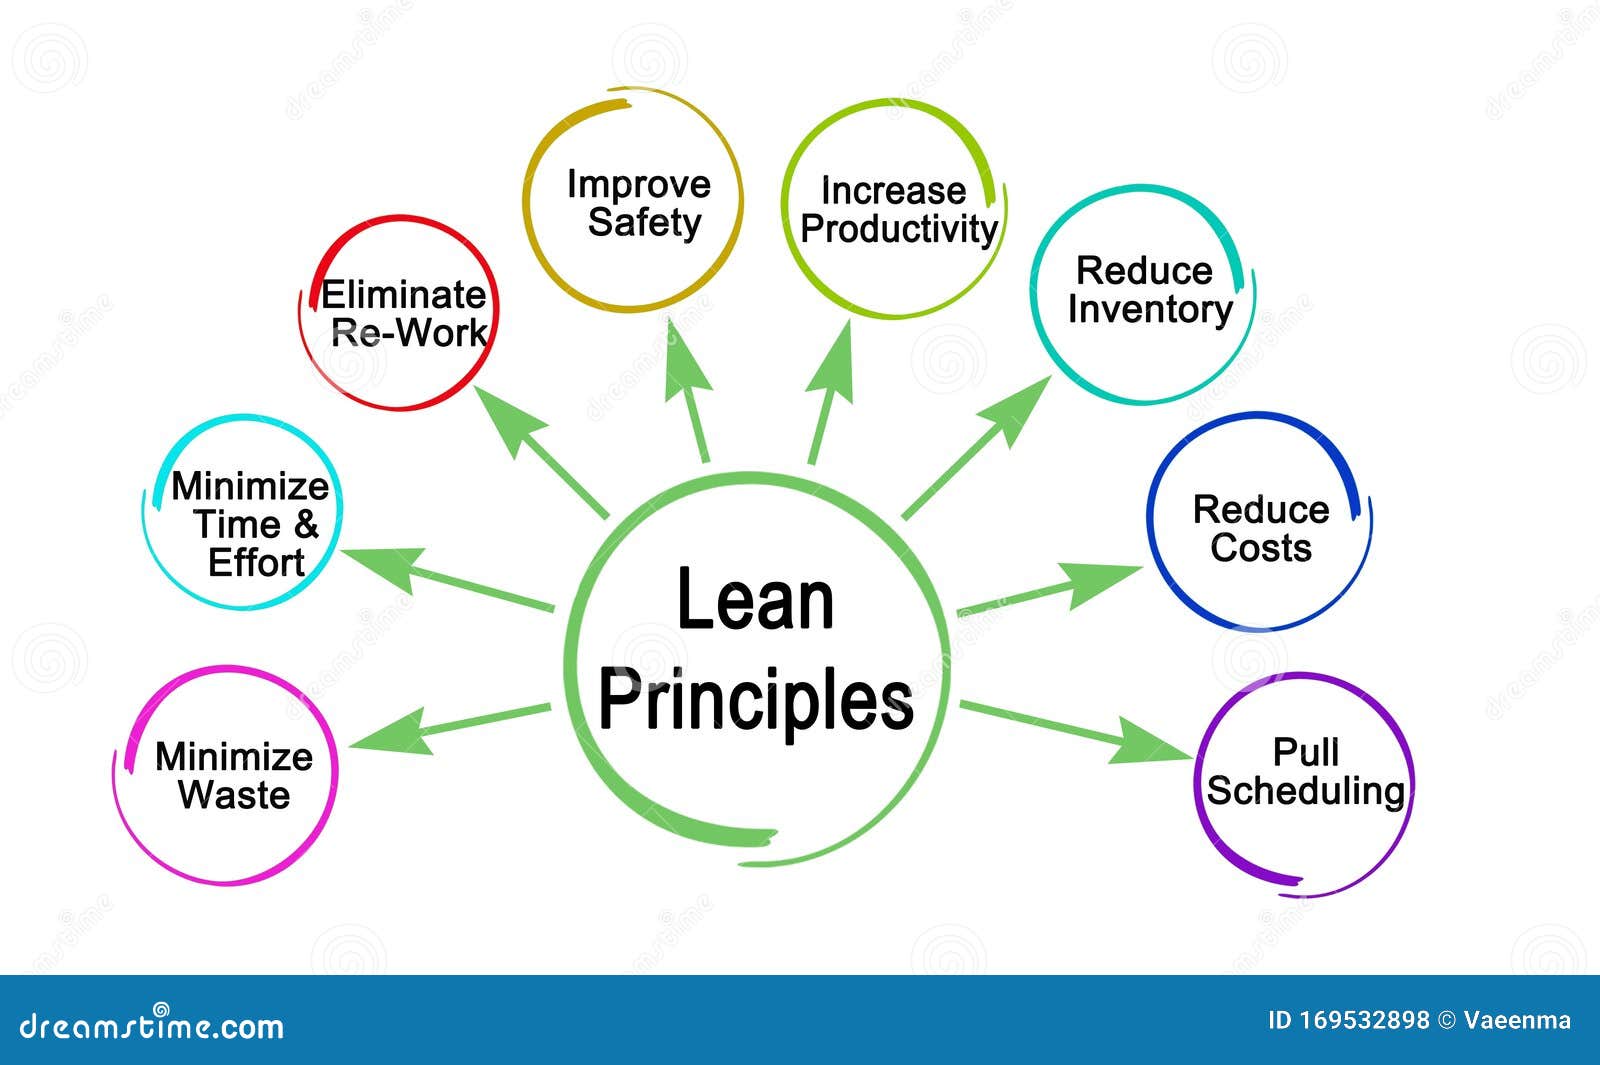 7 Lean Principles